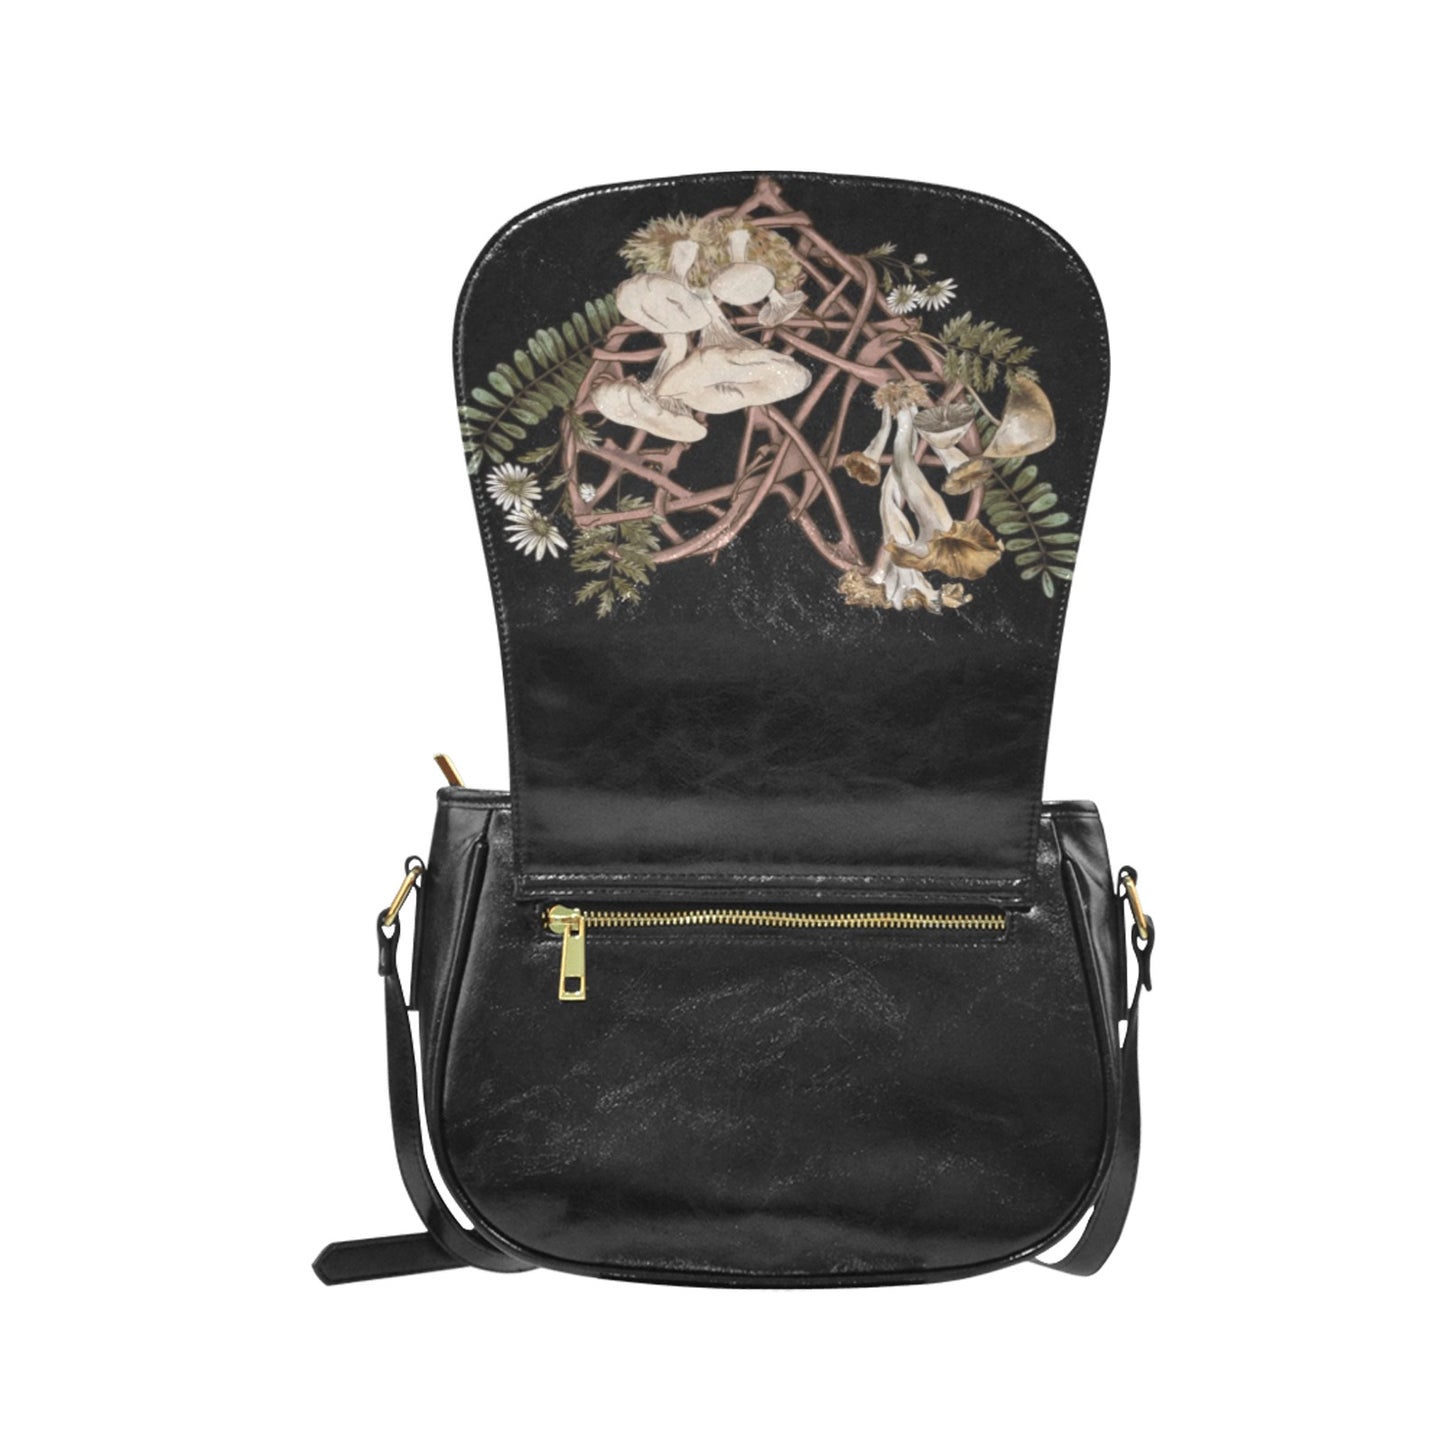 Mushroom Forest Heart wreath saddle bag